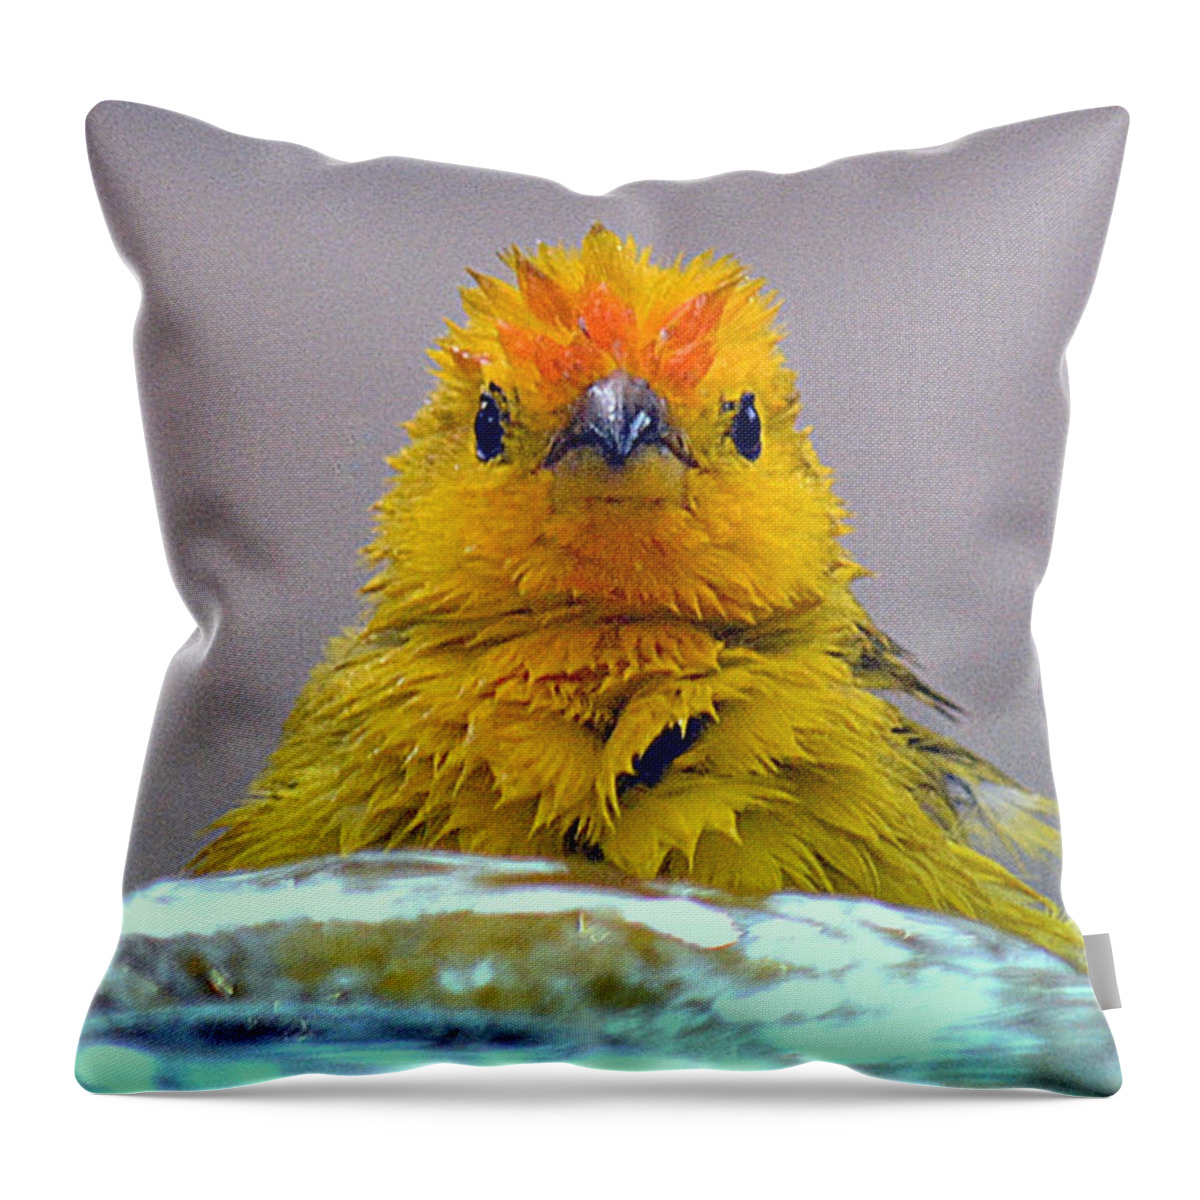 Bird Throw Pillow featuring the photograph Bath Time Finch by Lori Seaman